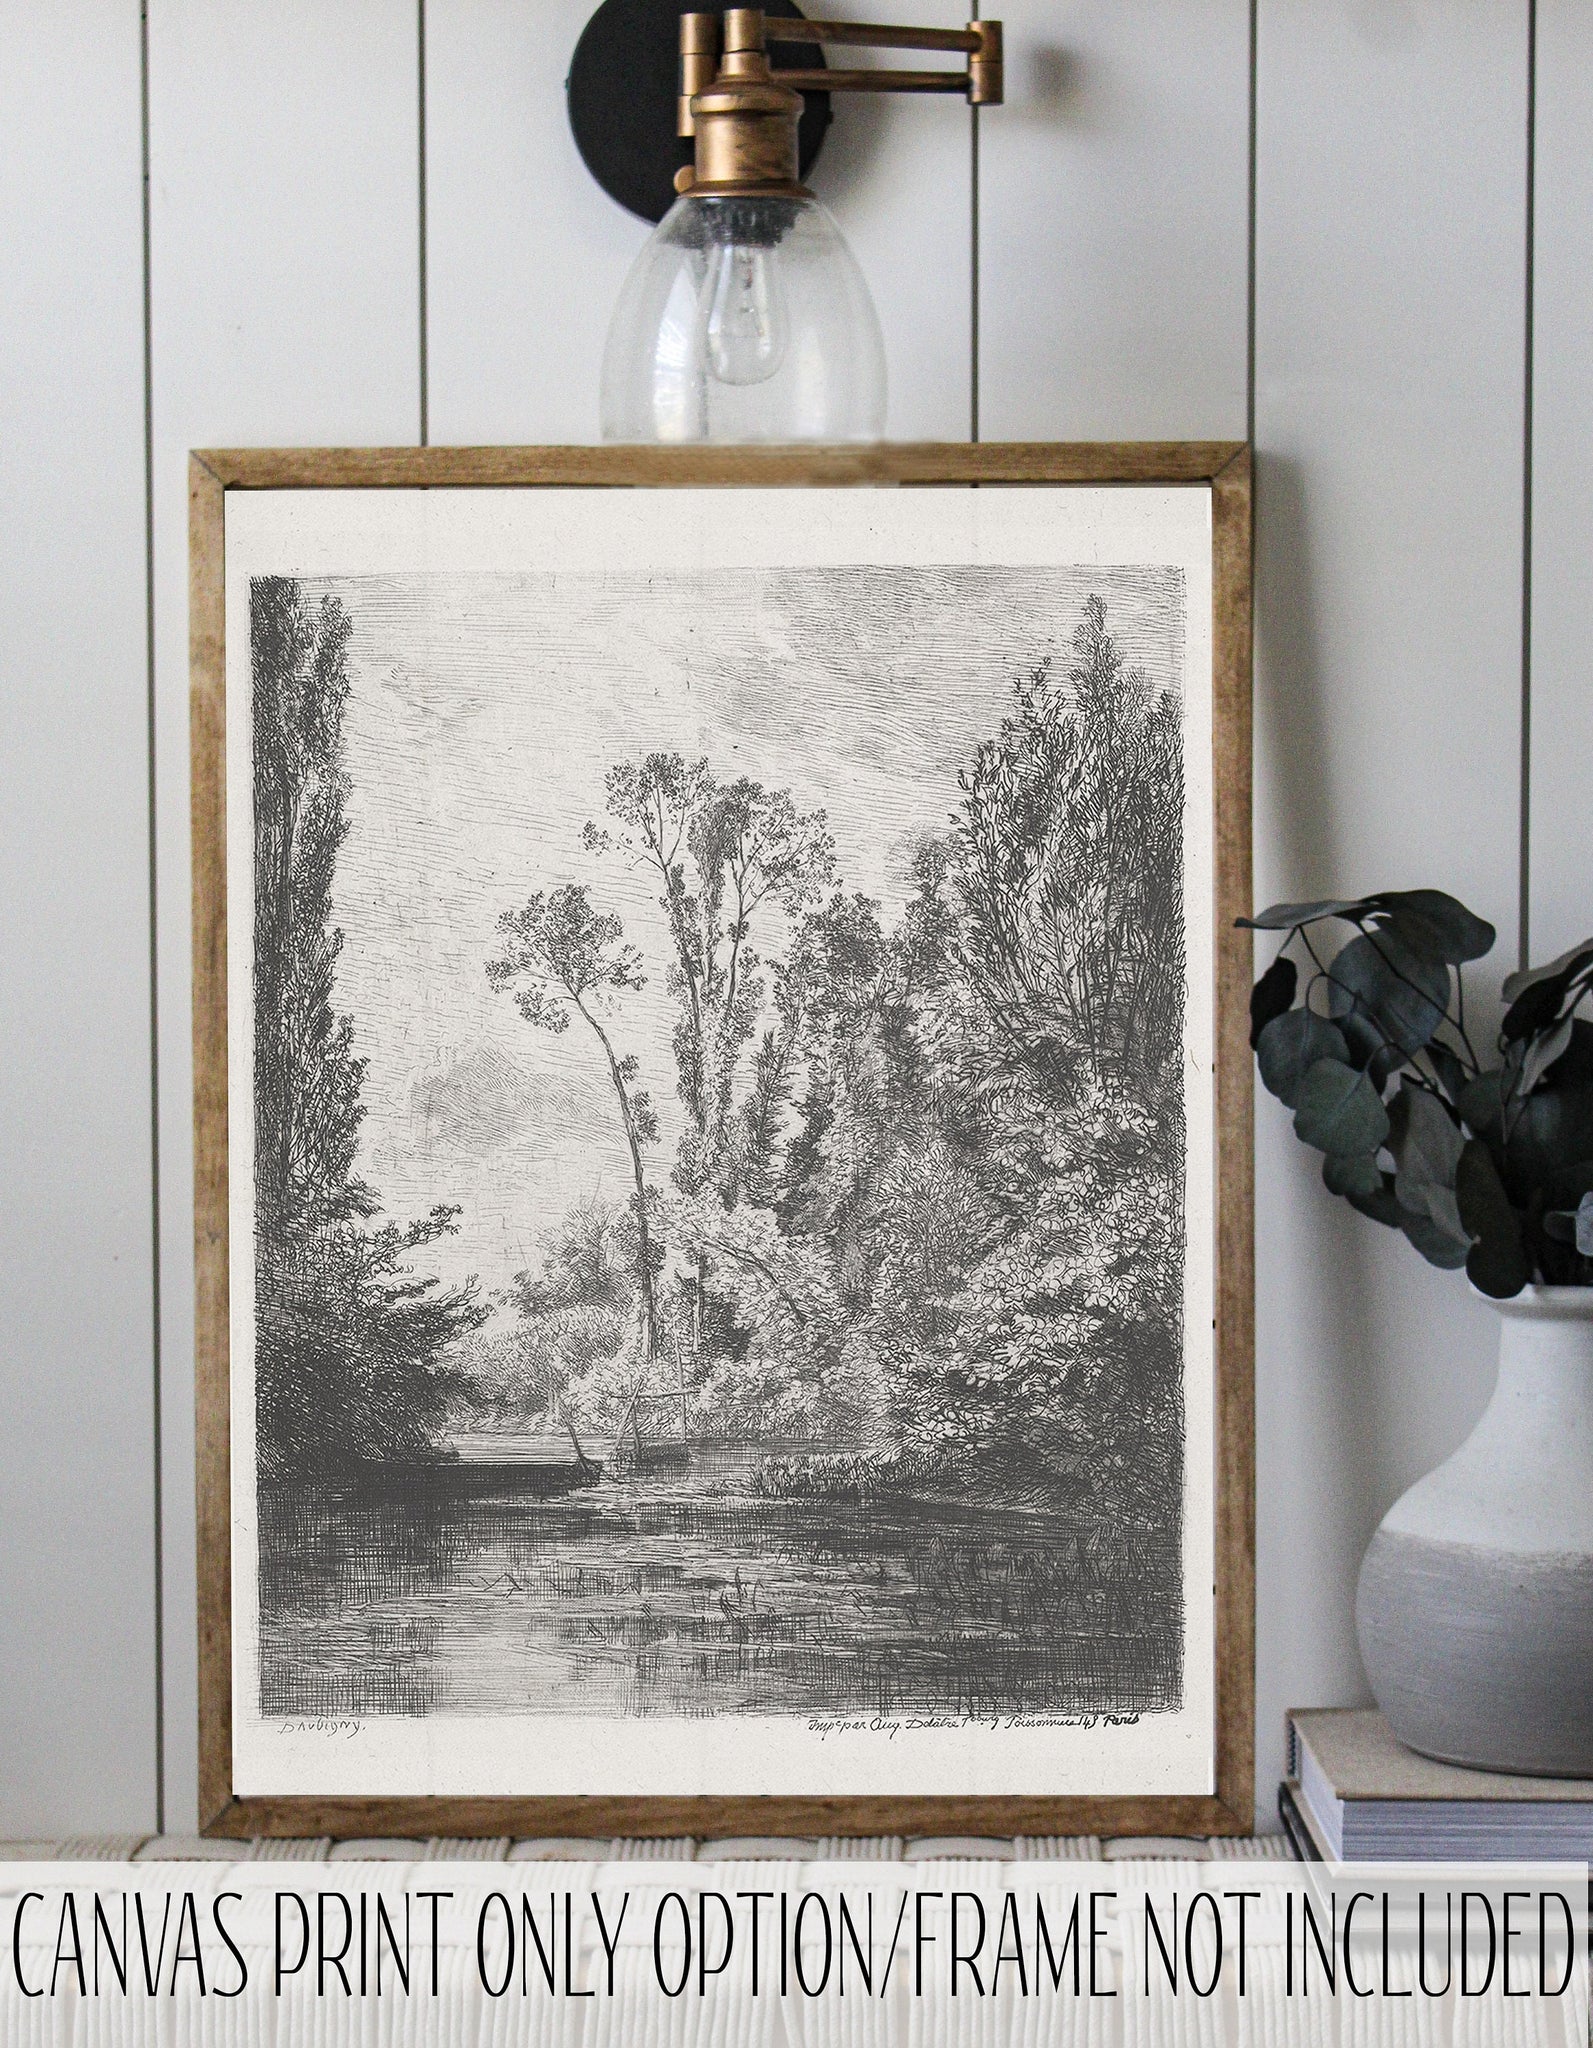 Vintage painting print/canvas art print/landscape/black and white sketch/tree sketch/home decor/canvas art/#130